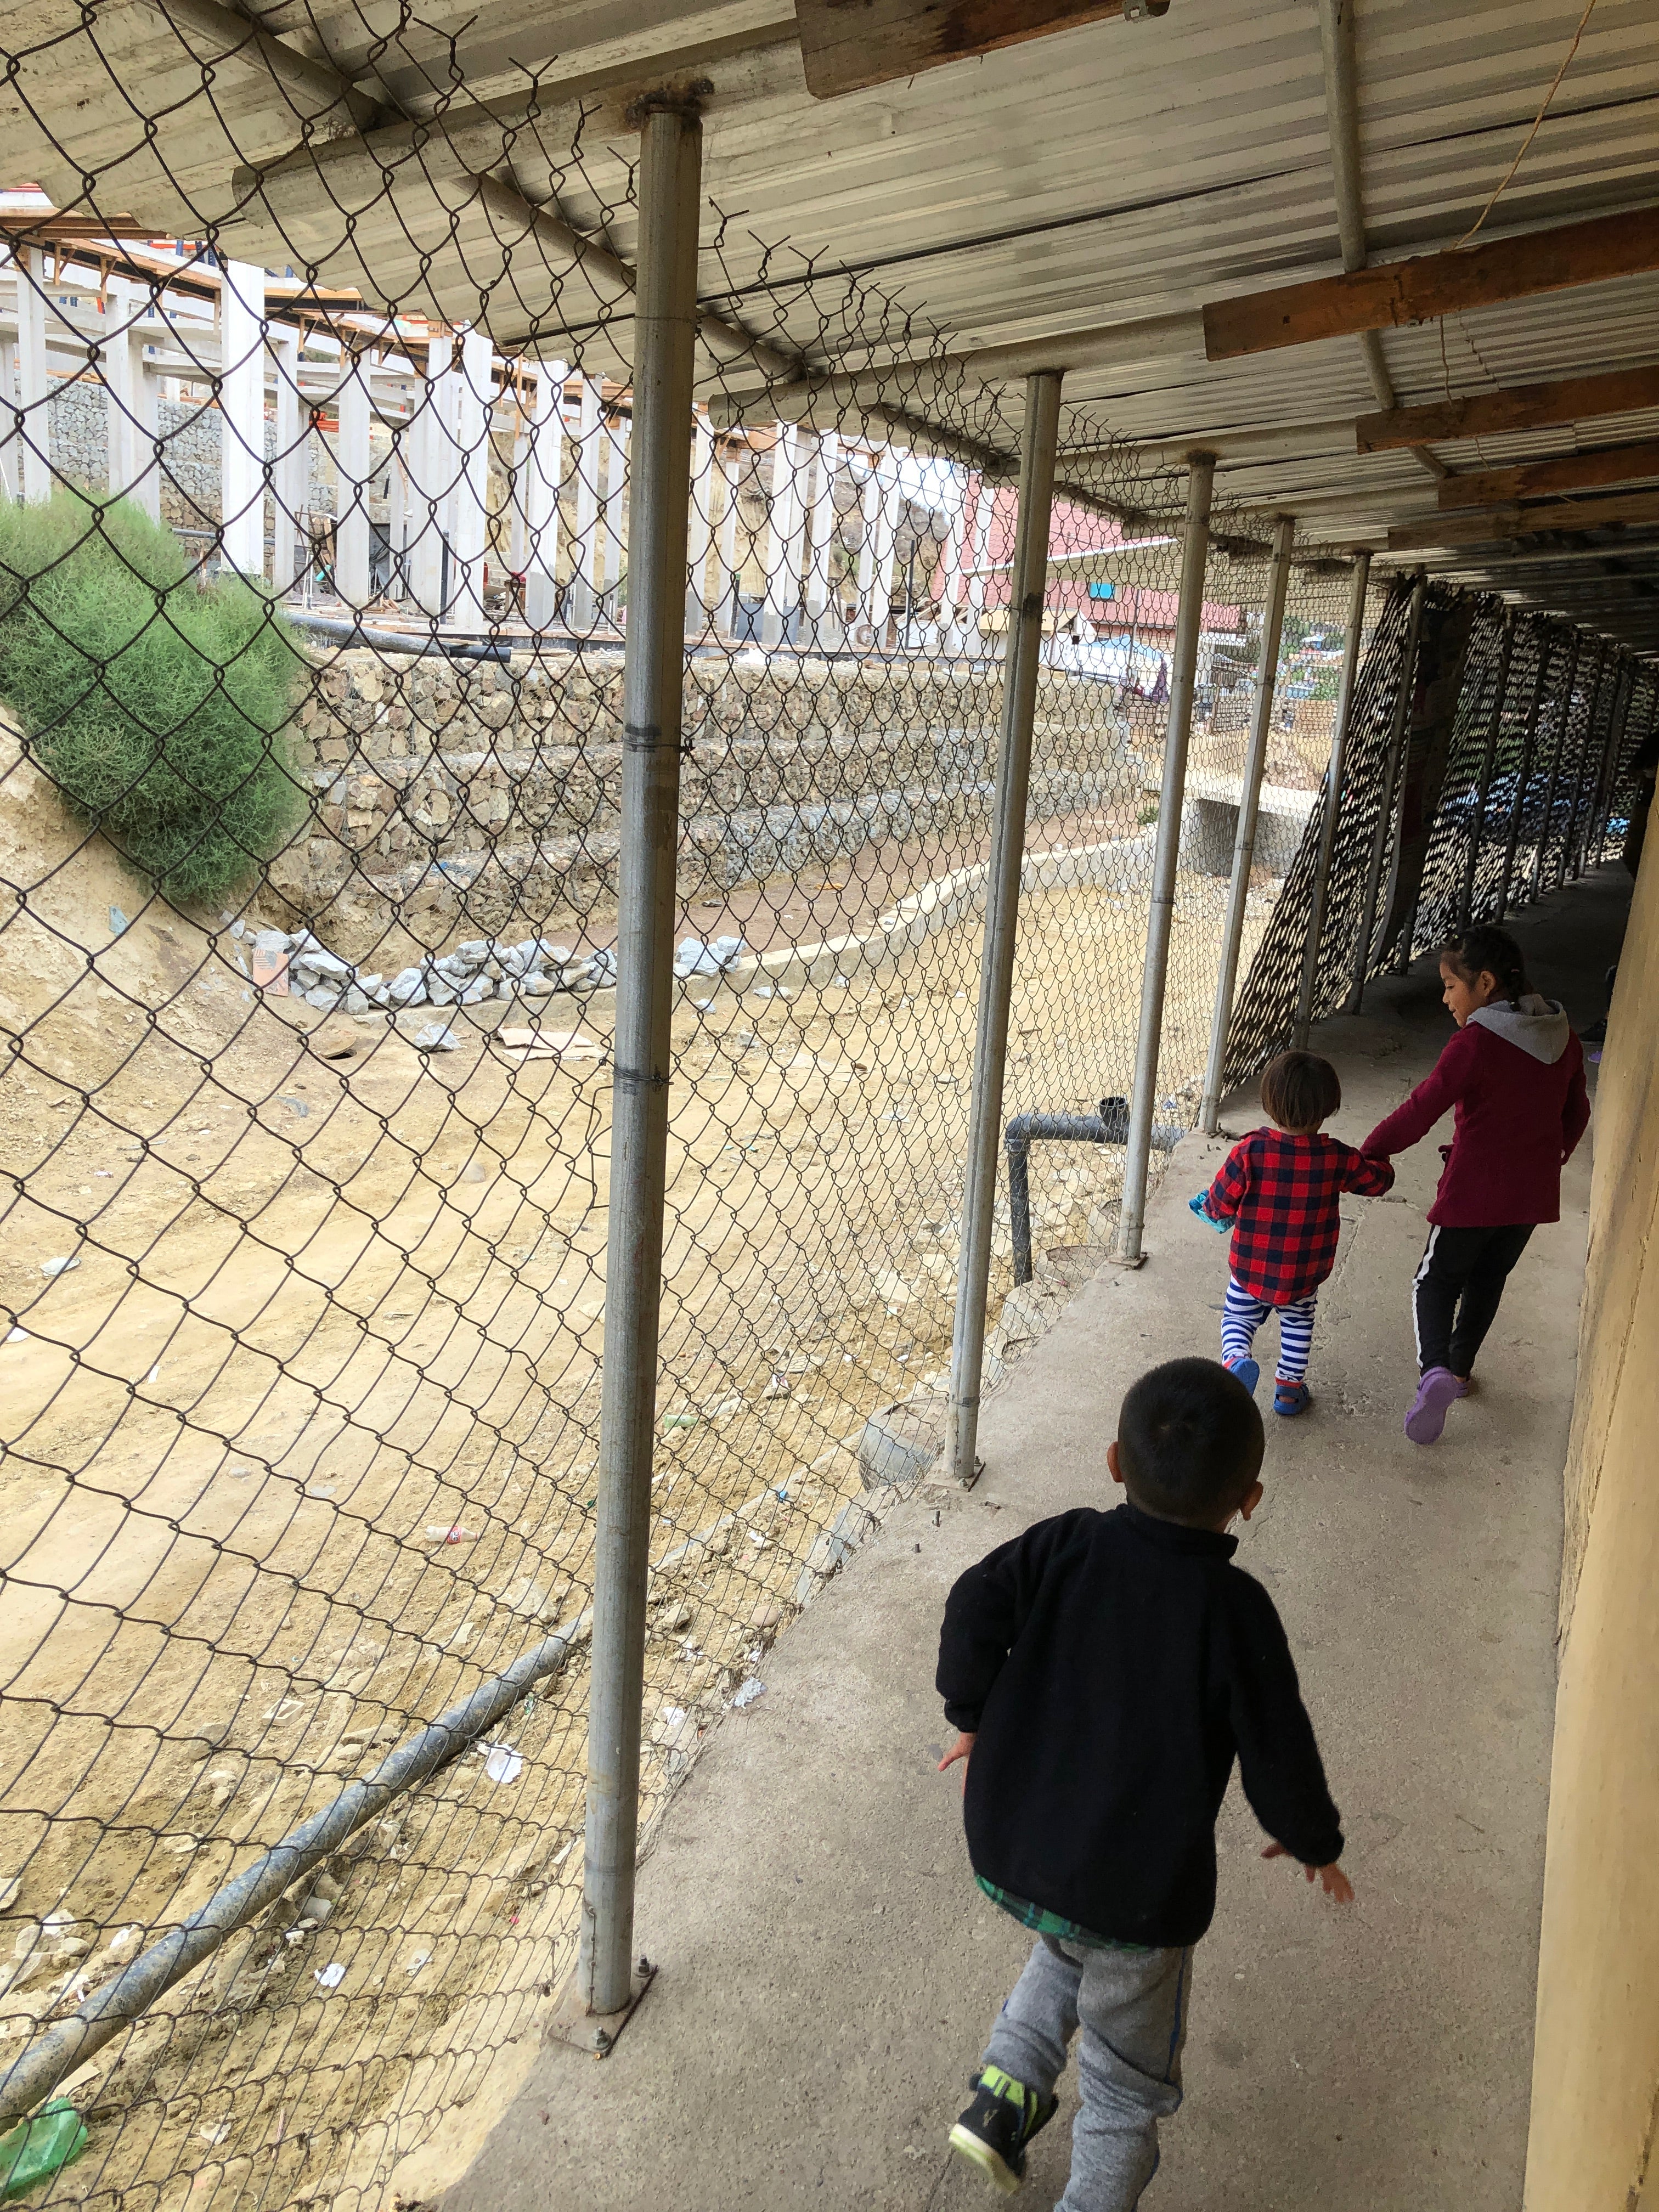 refugee camp kids near chain link fence sanctuary partnership do good shop